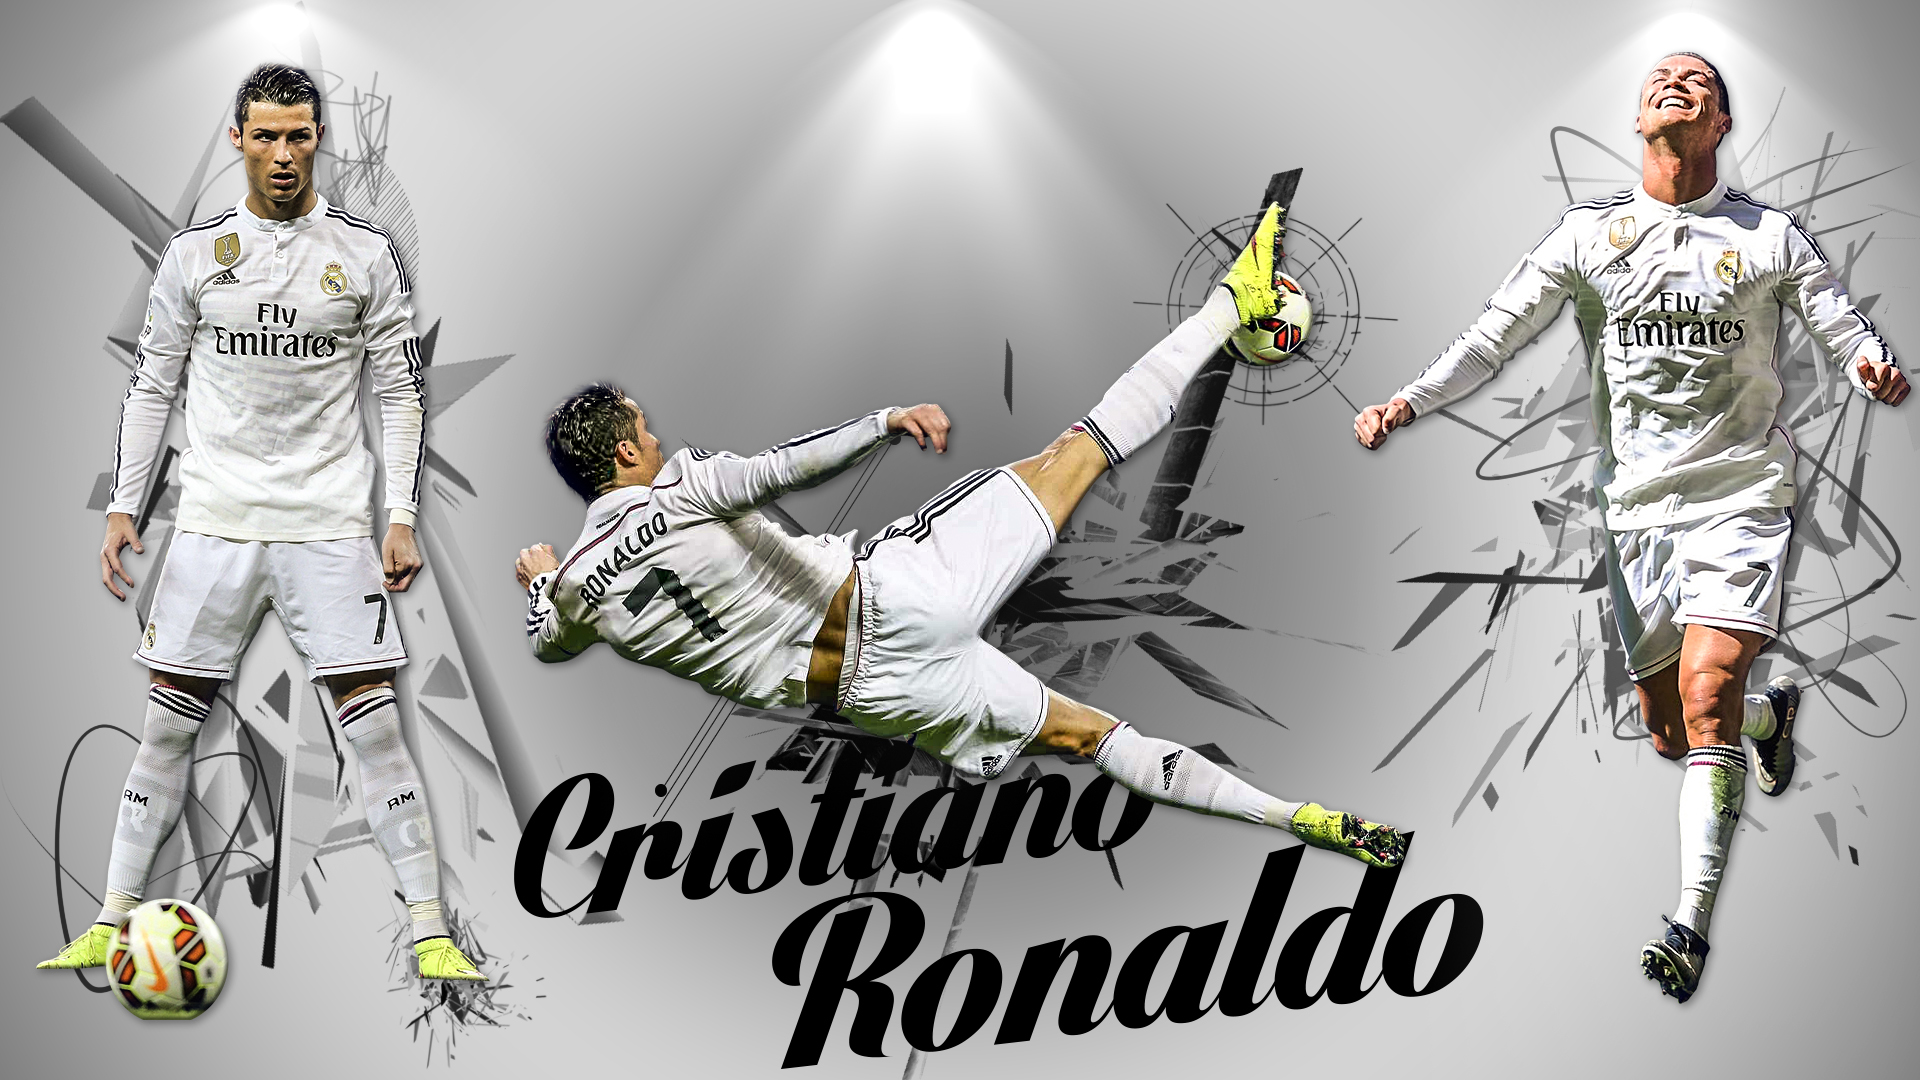 Cristiano Ronaldo background by DoubleMpics on DeviantArt